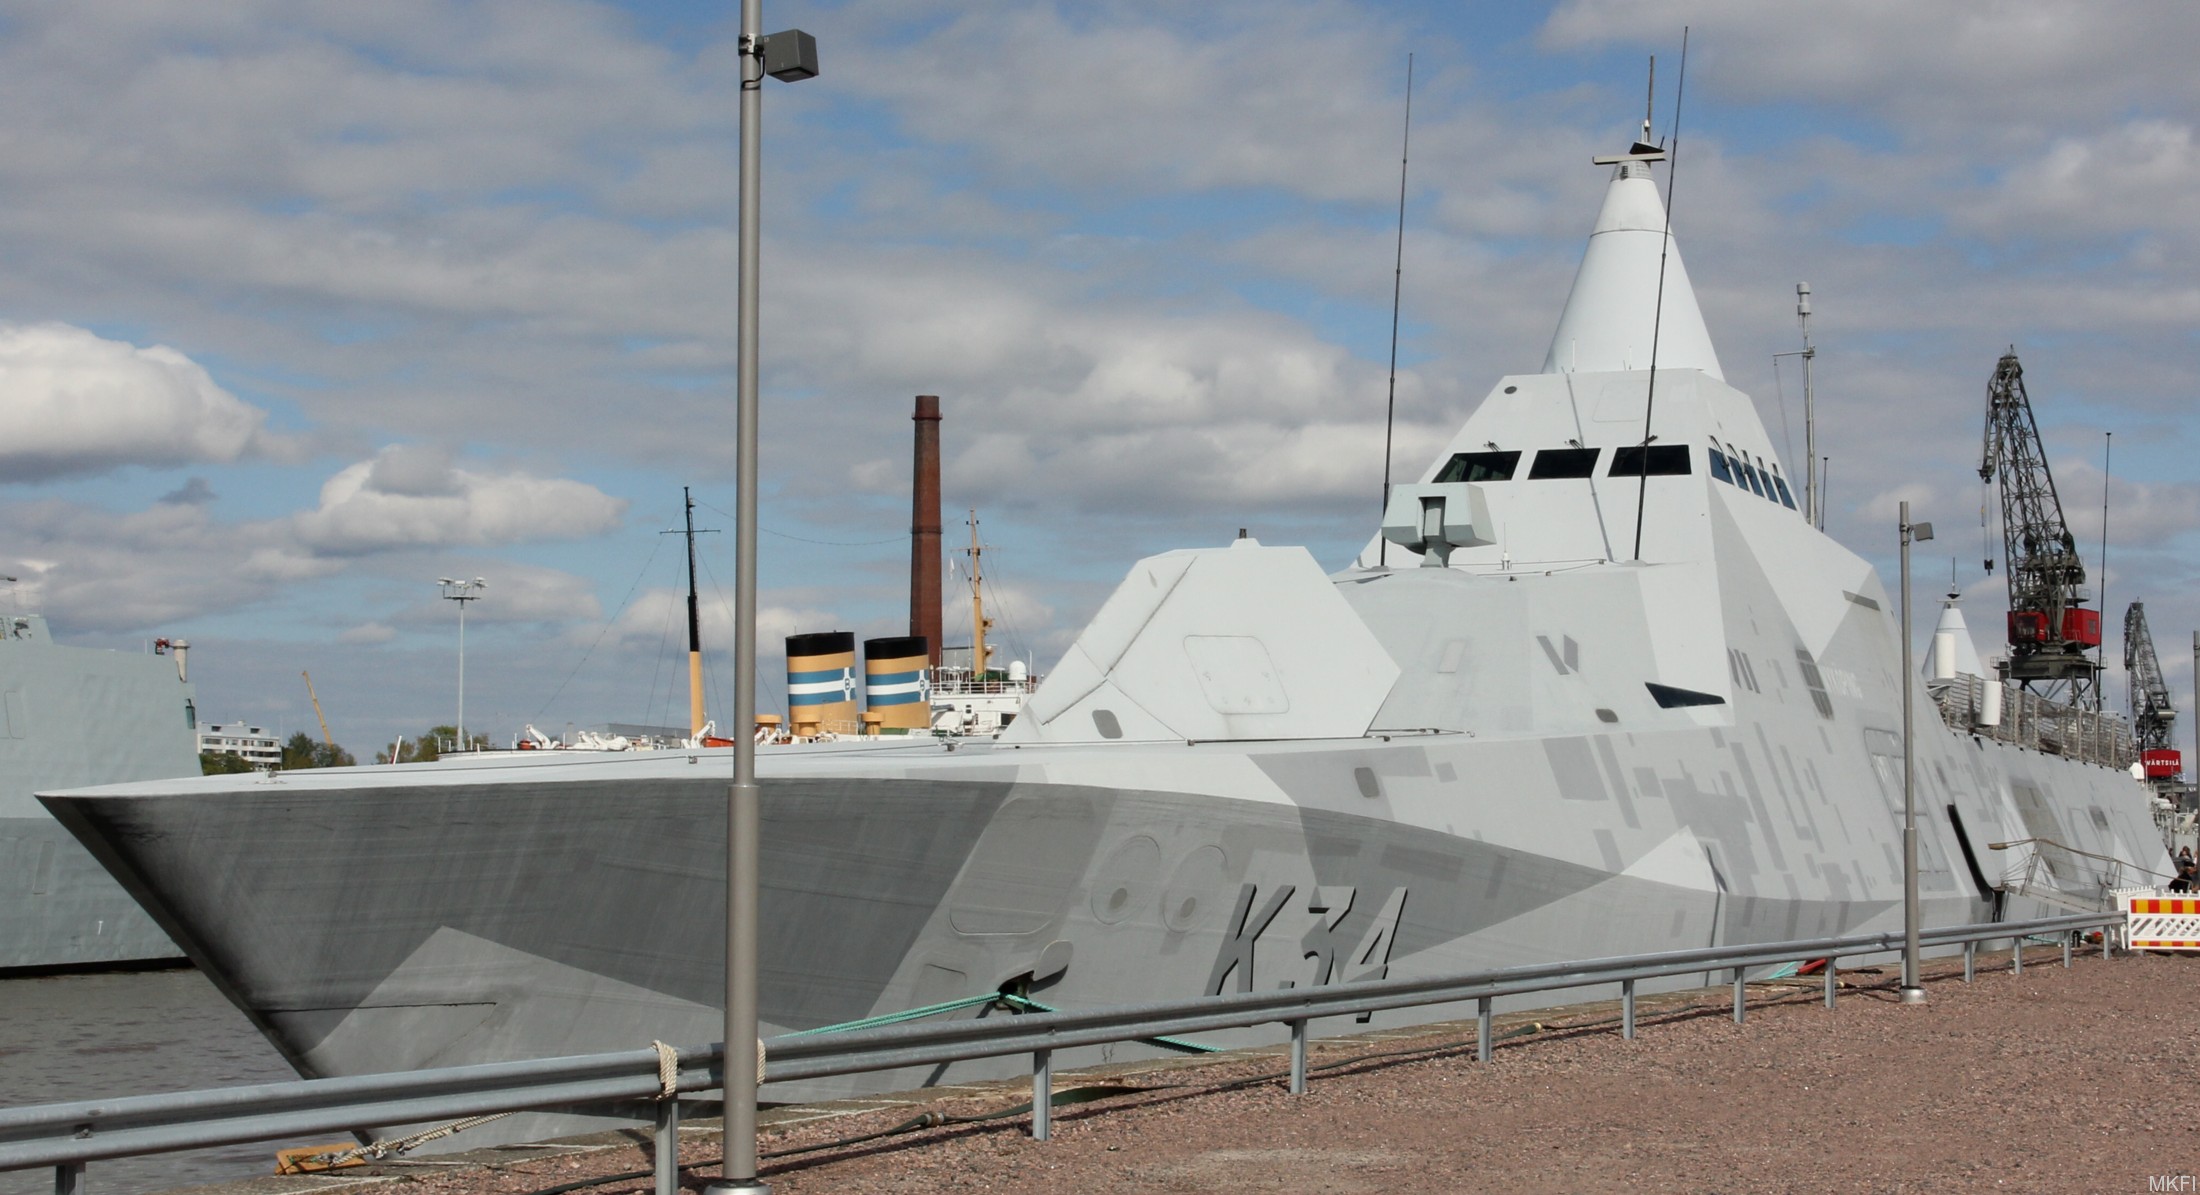 k34 hswms hms nykoping visby class corvette royal swedish navy svenska marinen 14